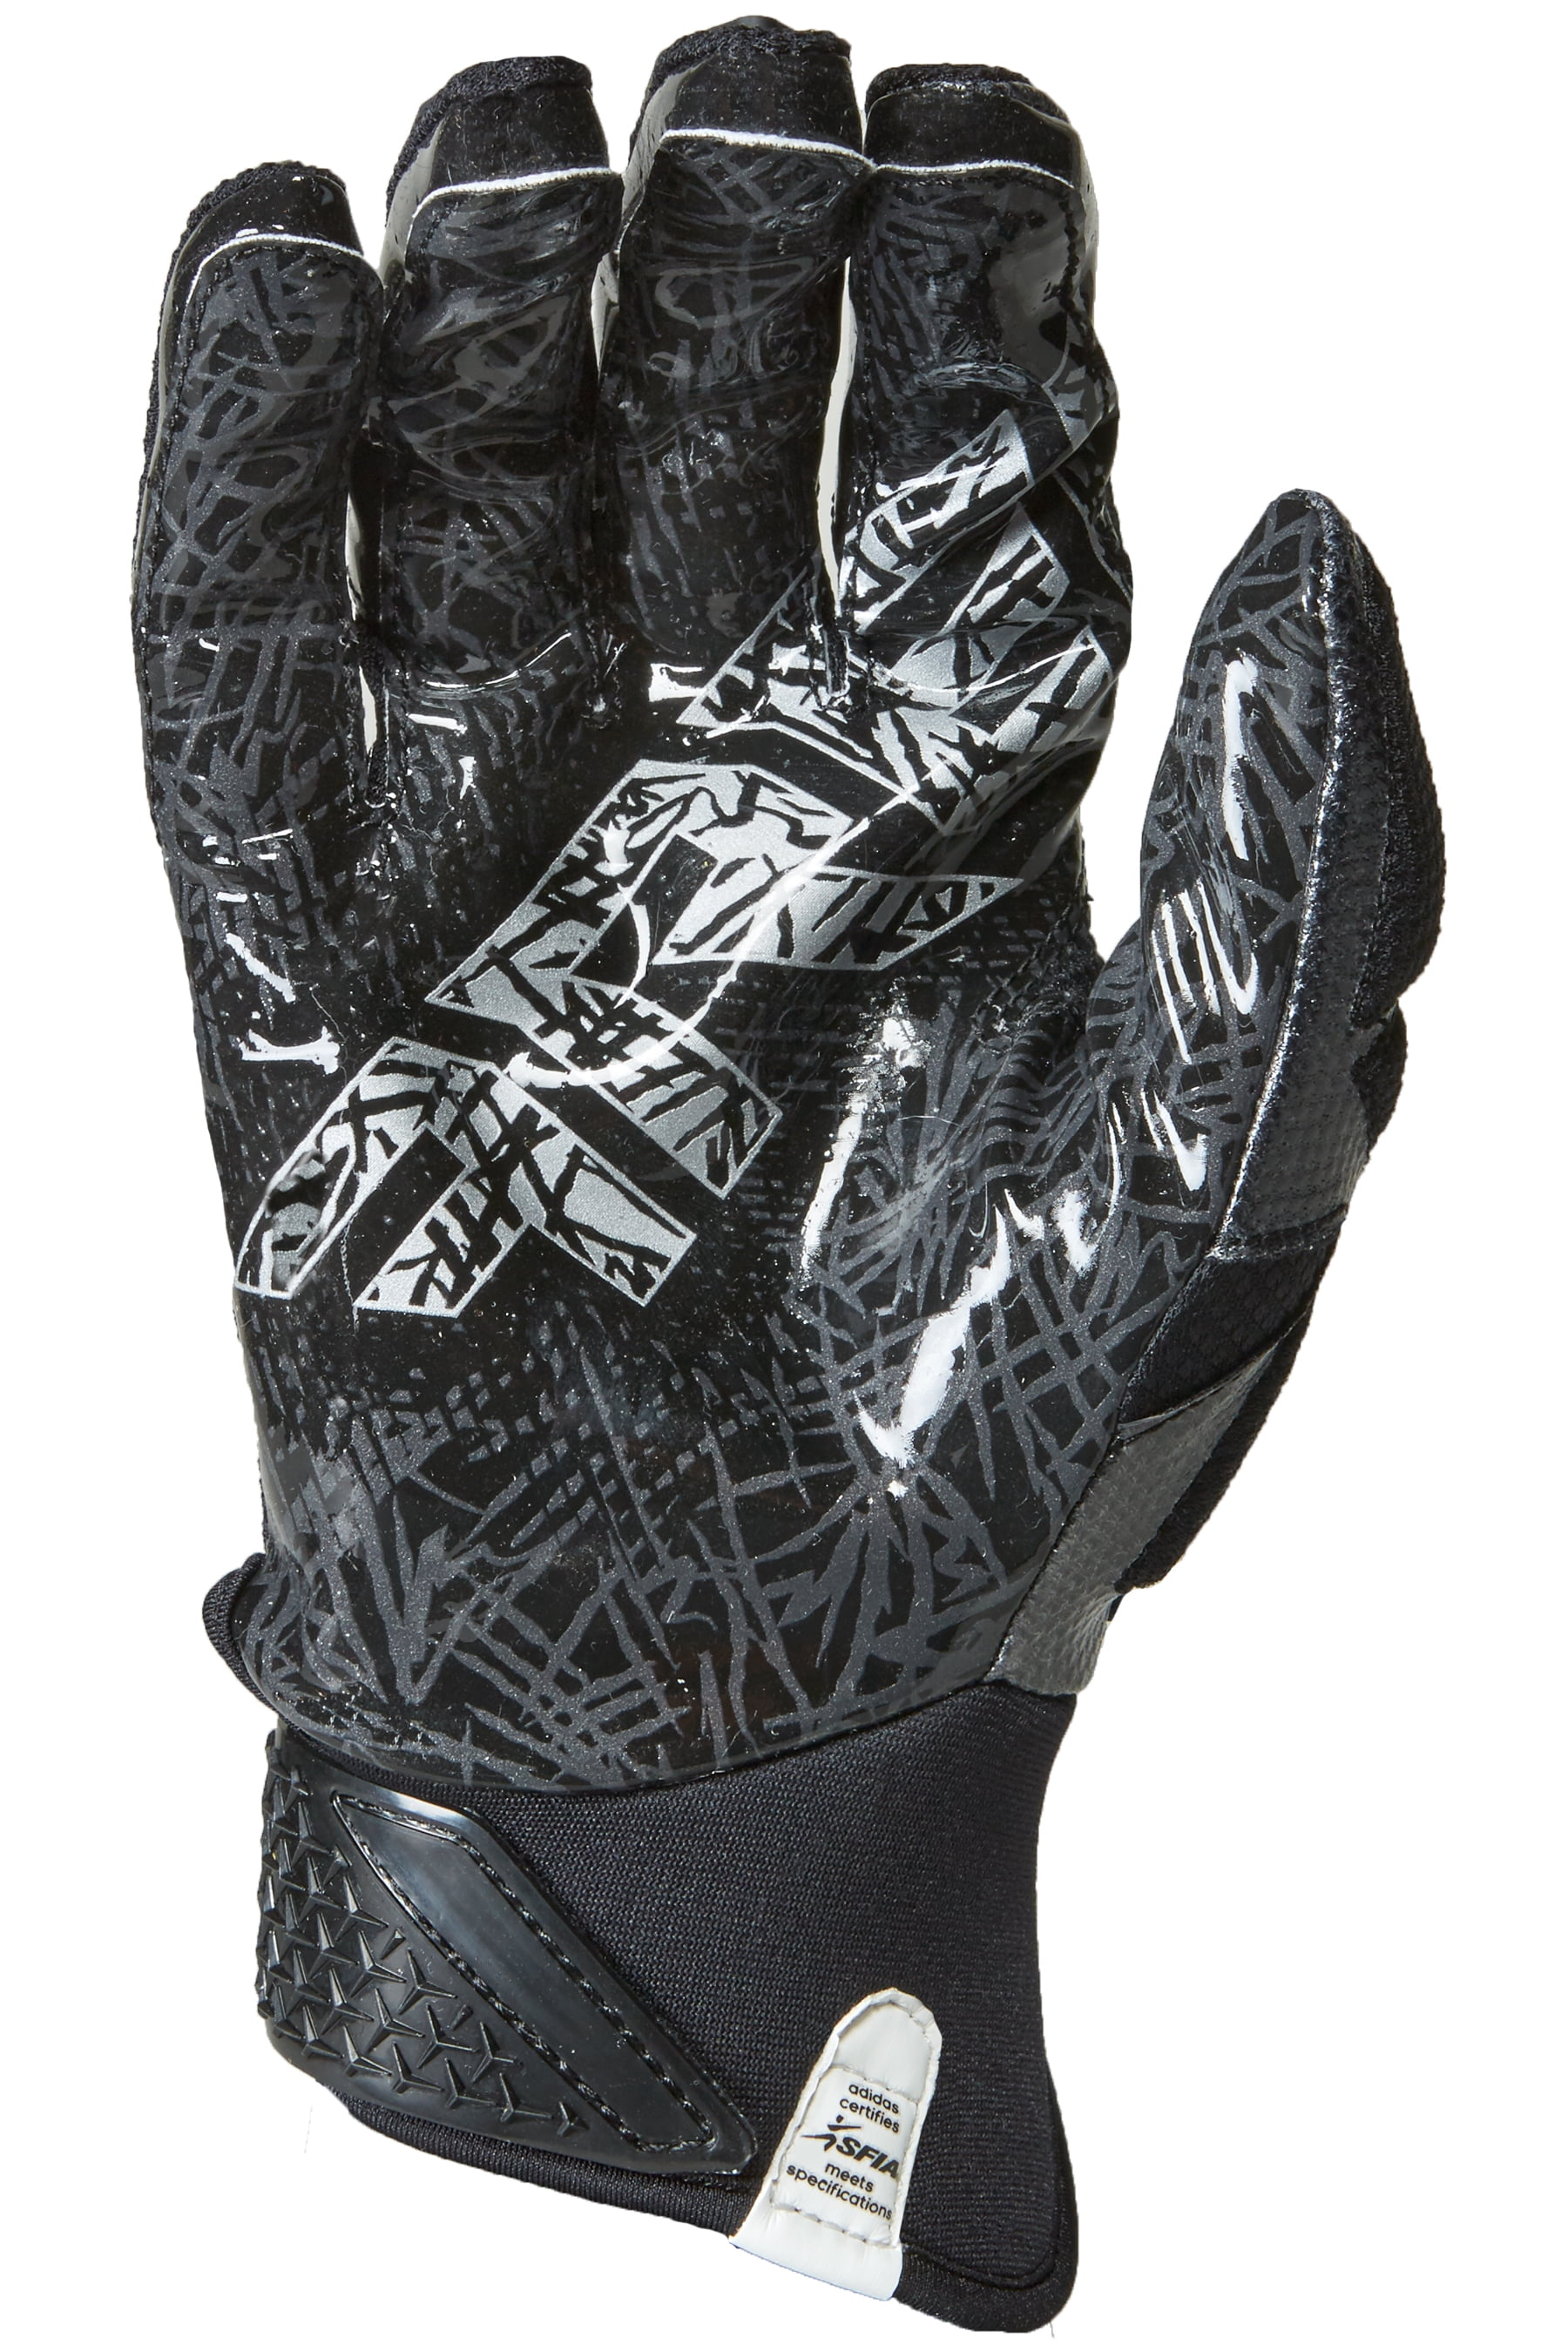 adidas freak 3.0 football gloves